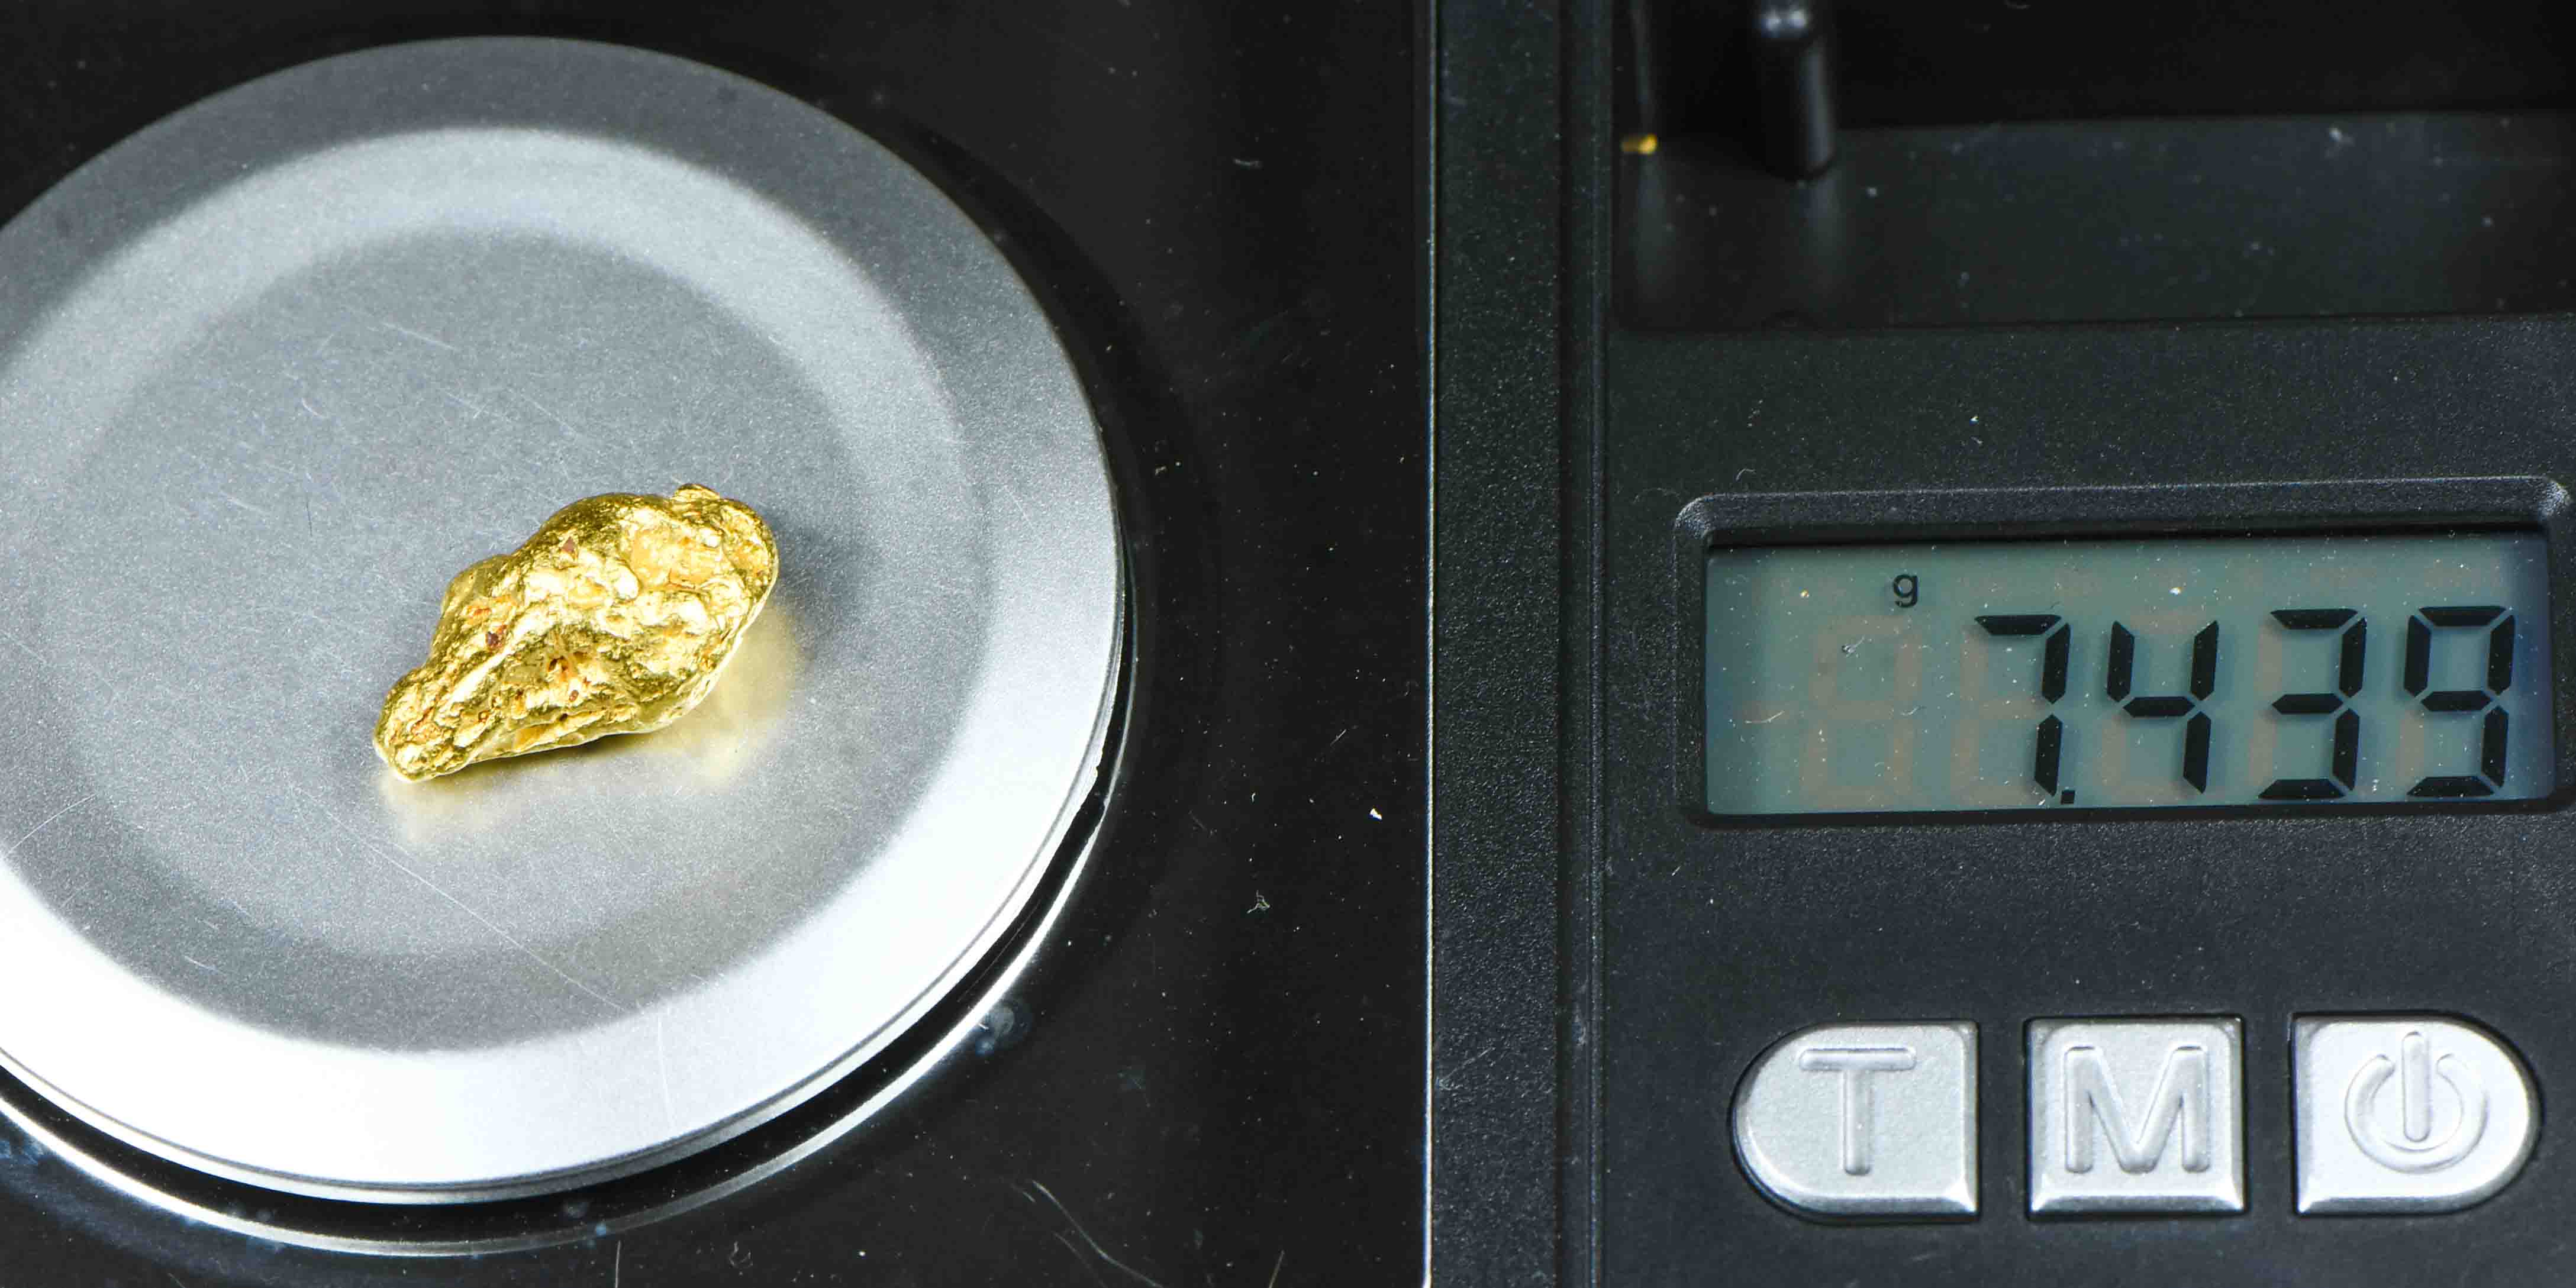 #1157 Natural Gold Nugget Australian 7.43 Grams Genuine